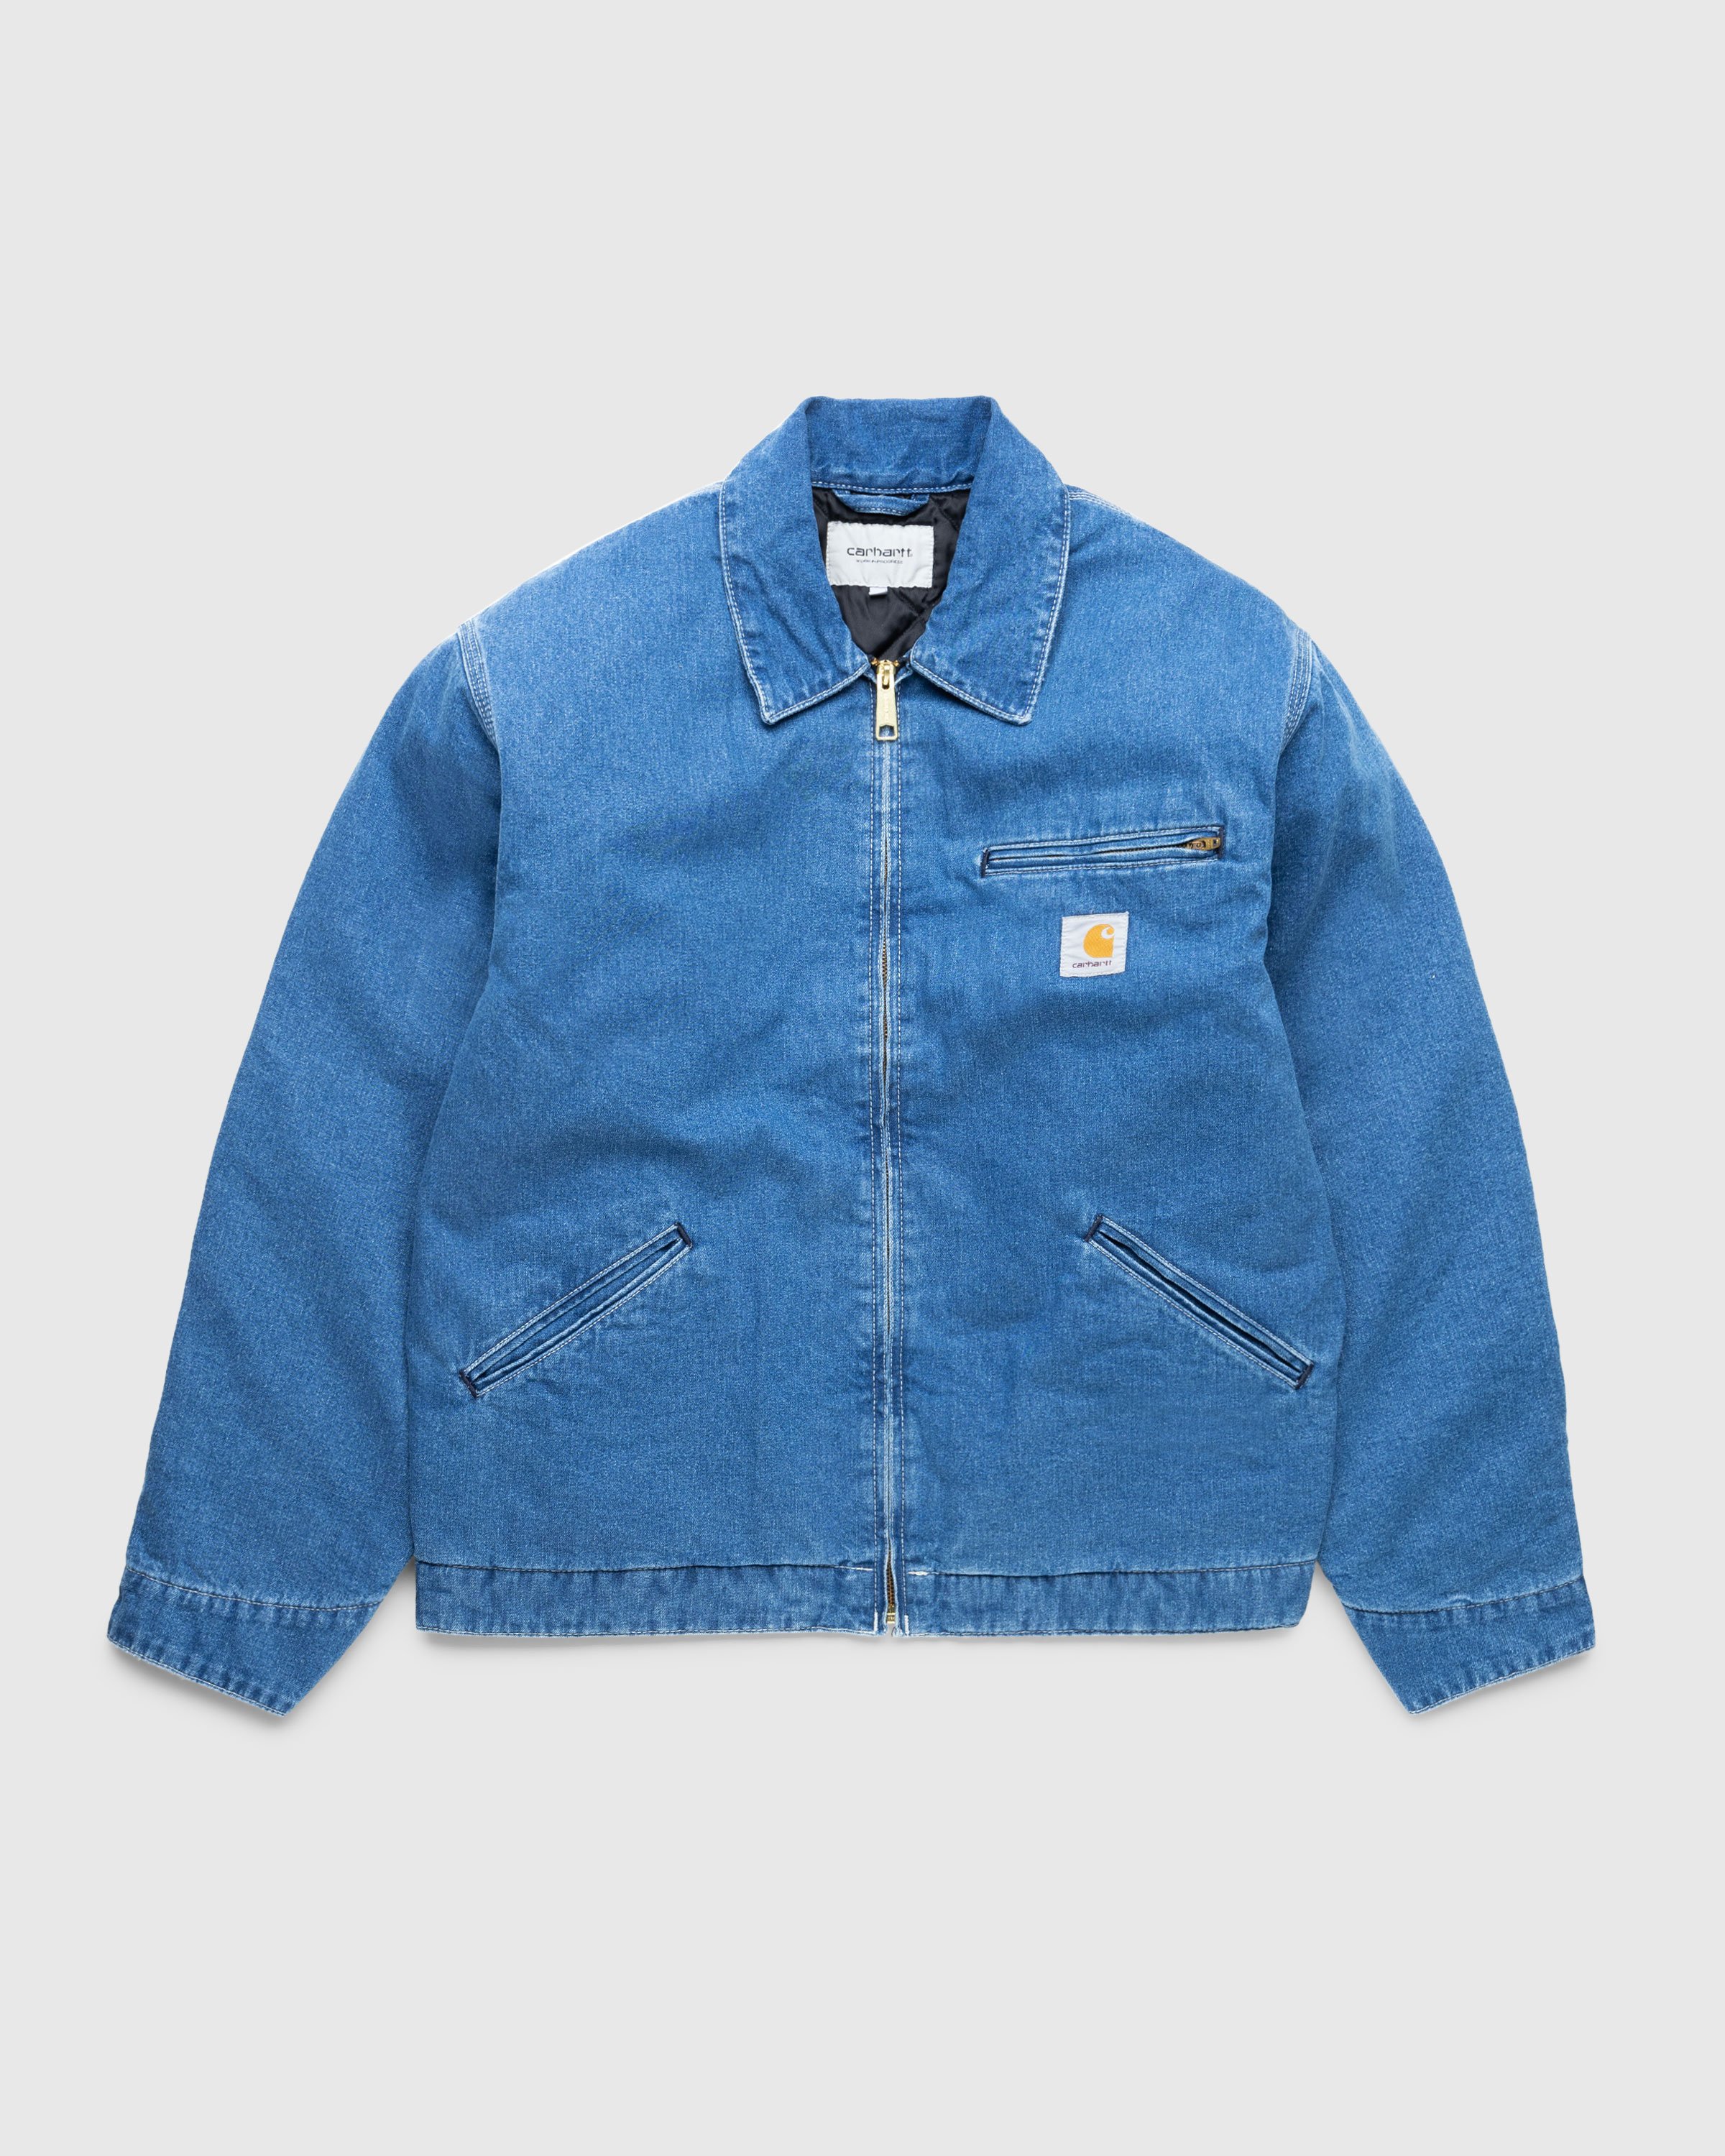 Carhartt WIP – OG Detroit Jacket Blue/Stone Washed | Highsnobiety Shop